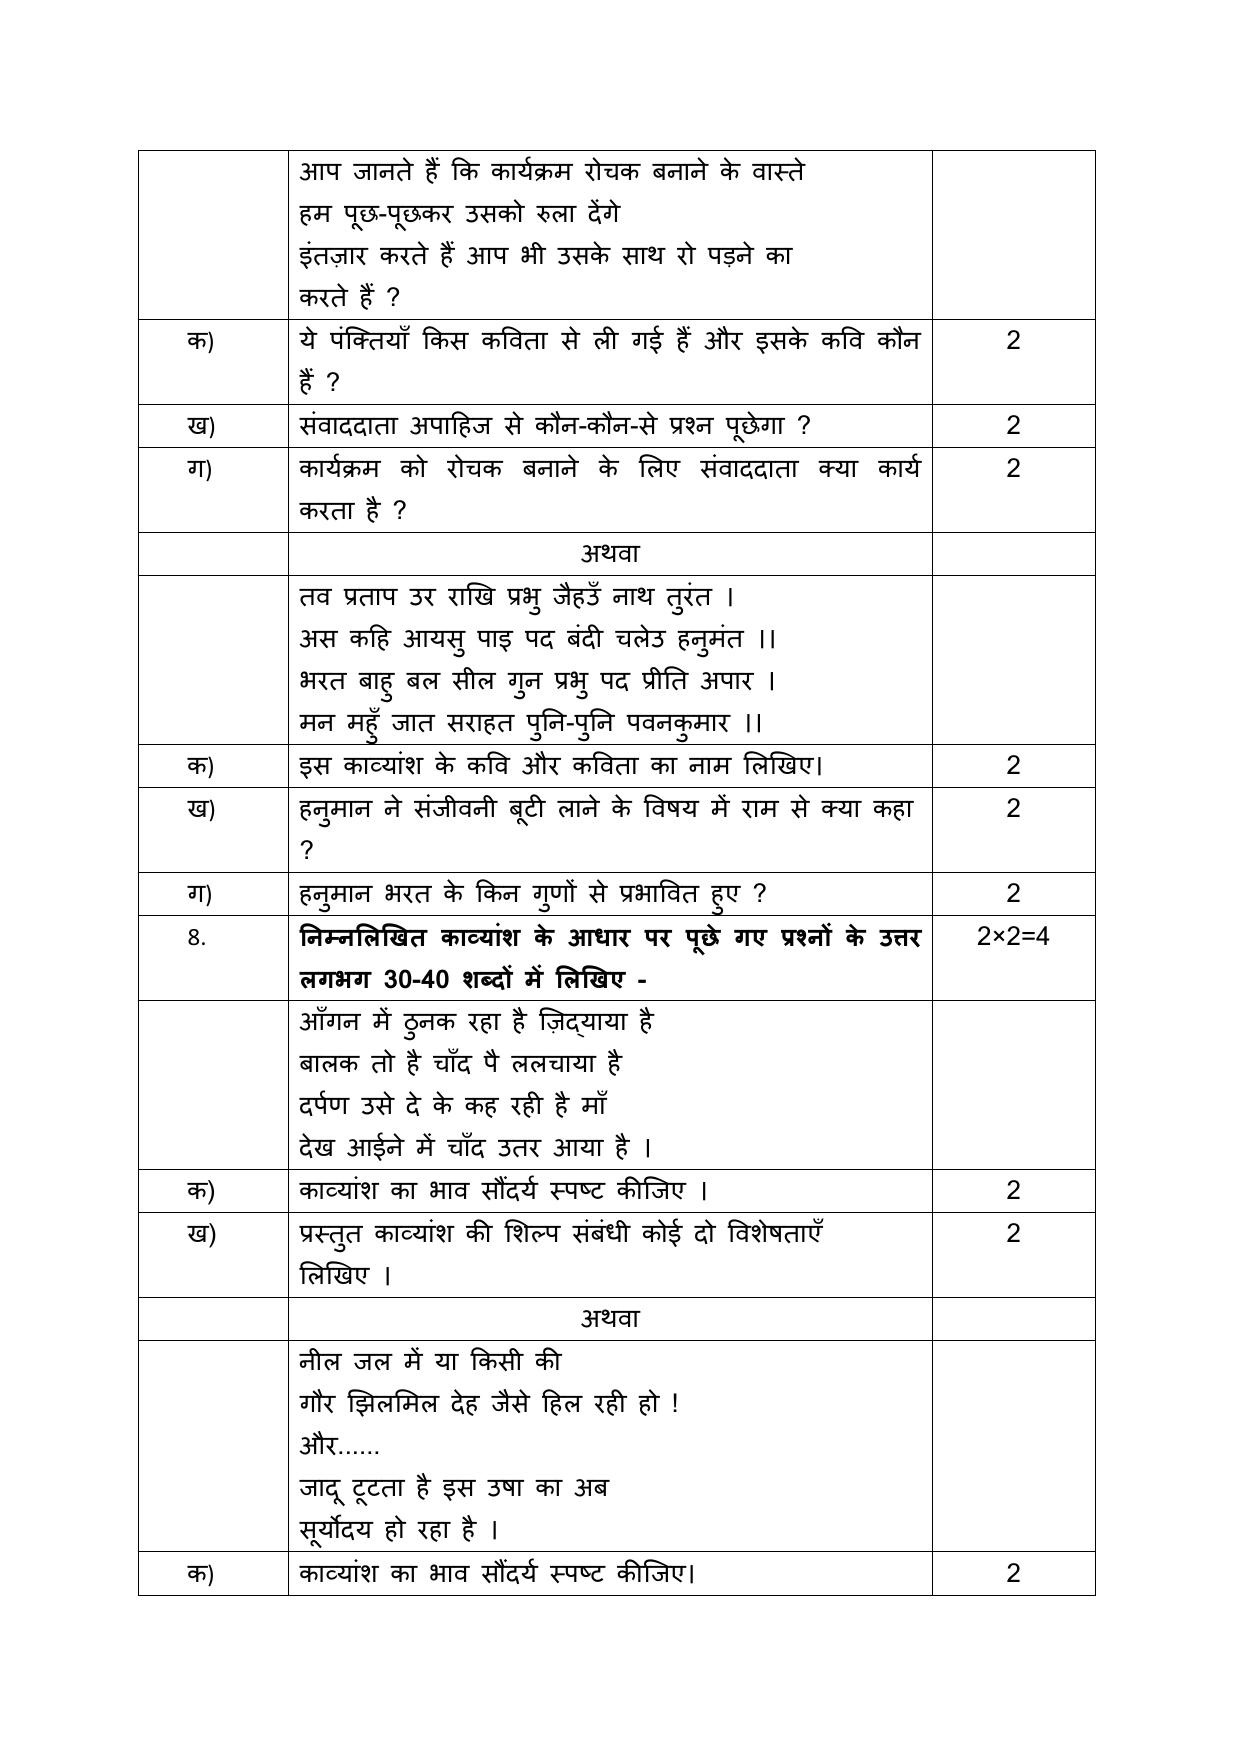 CBSE Class 12 Hindi Adhaar -Sample Paper 2019-20 - Page 5